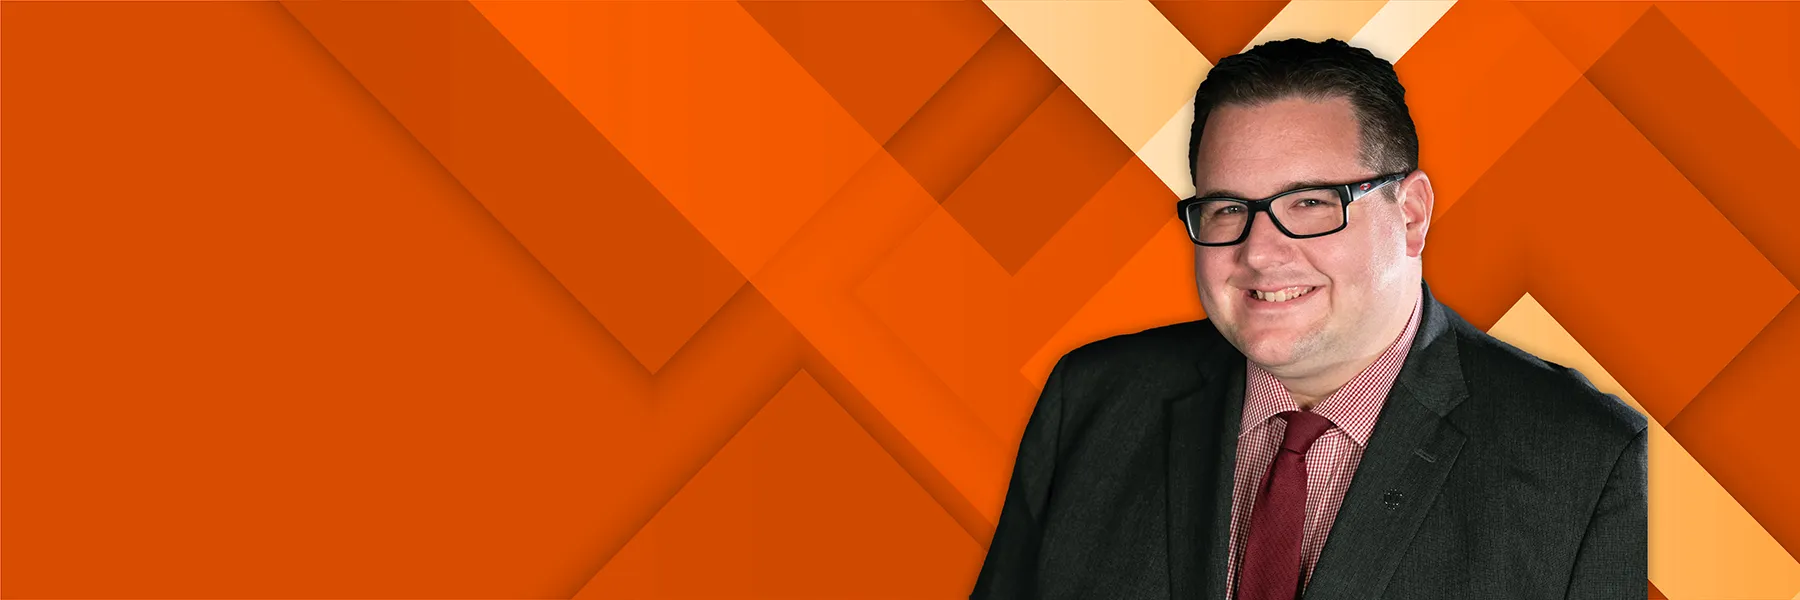 Interim Vice Chancellor of University Relations Joe Glover on an orange geometric background